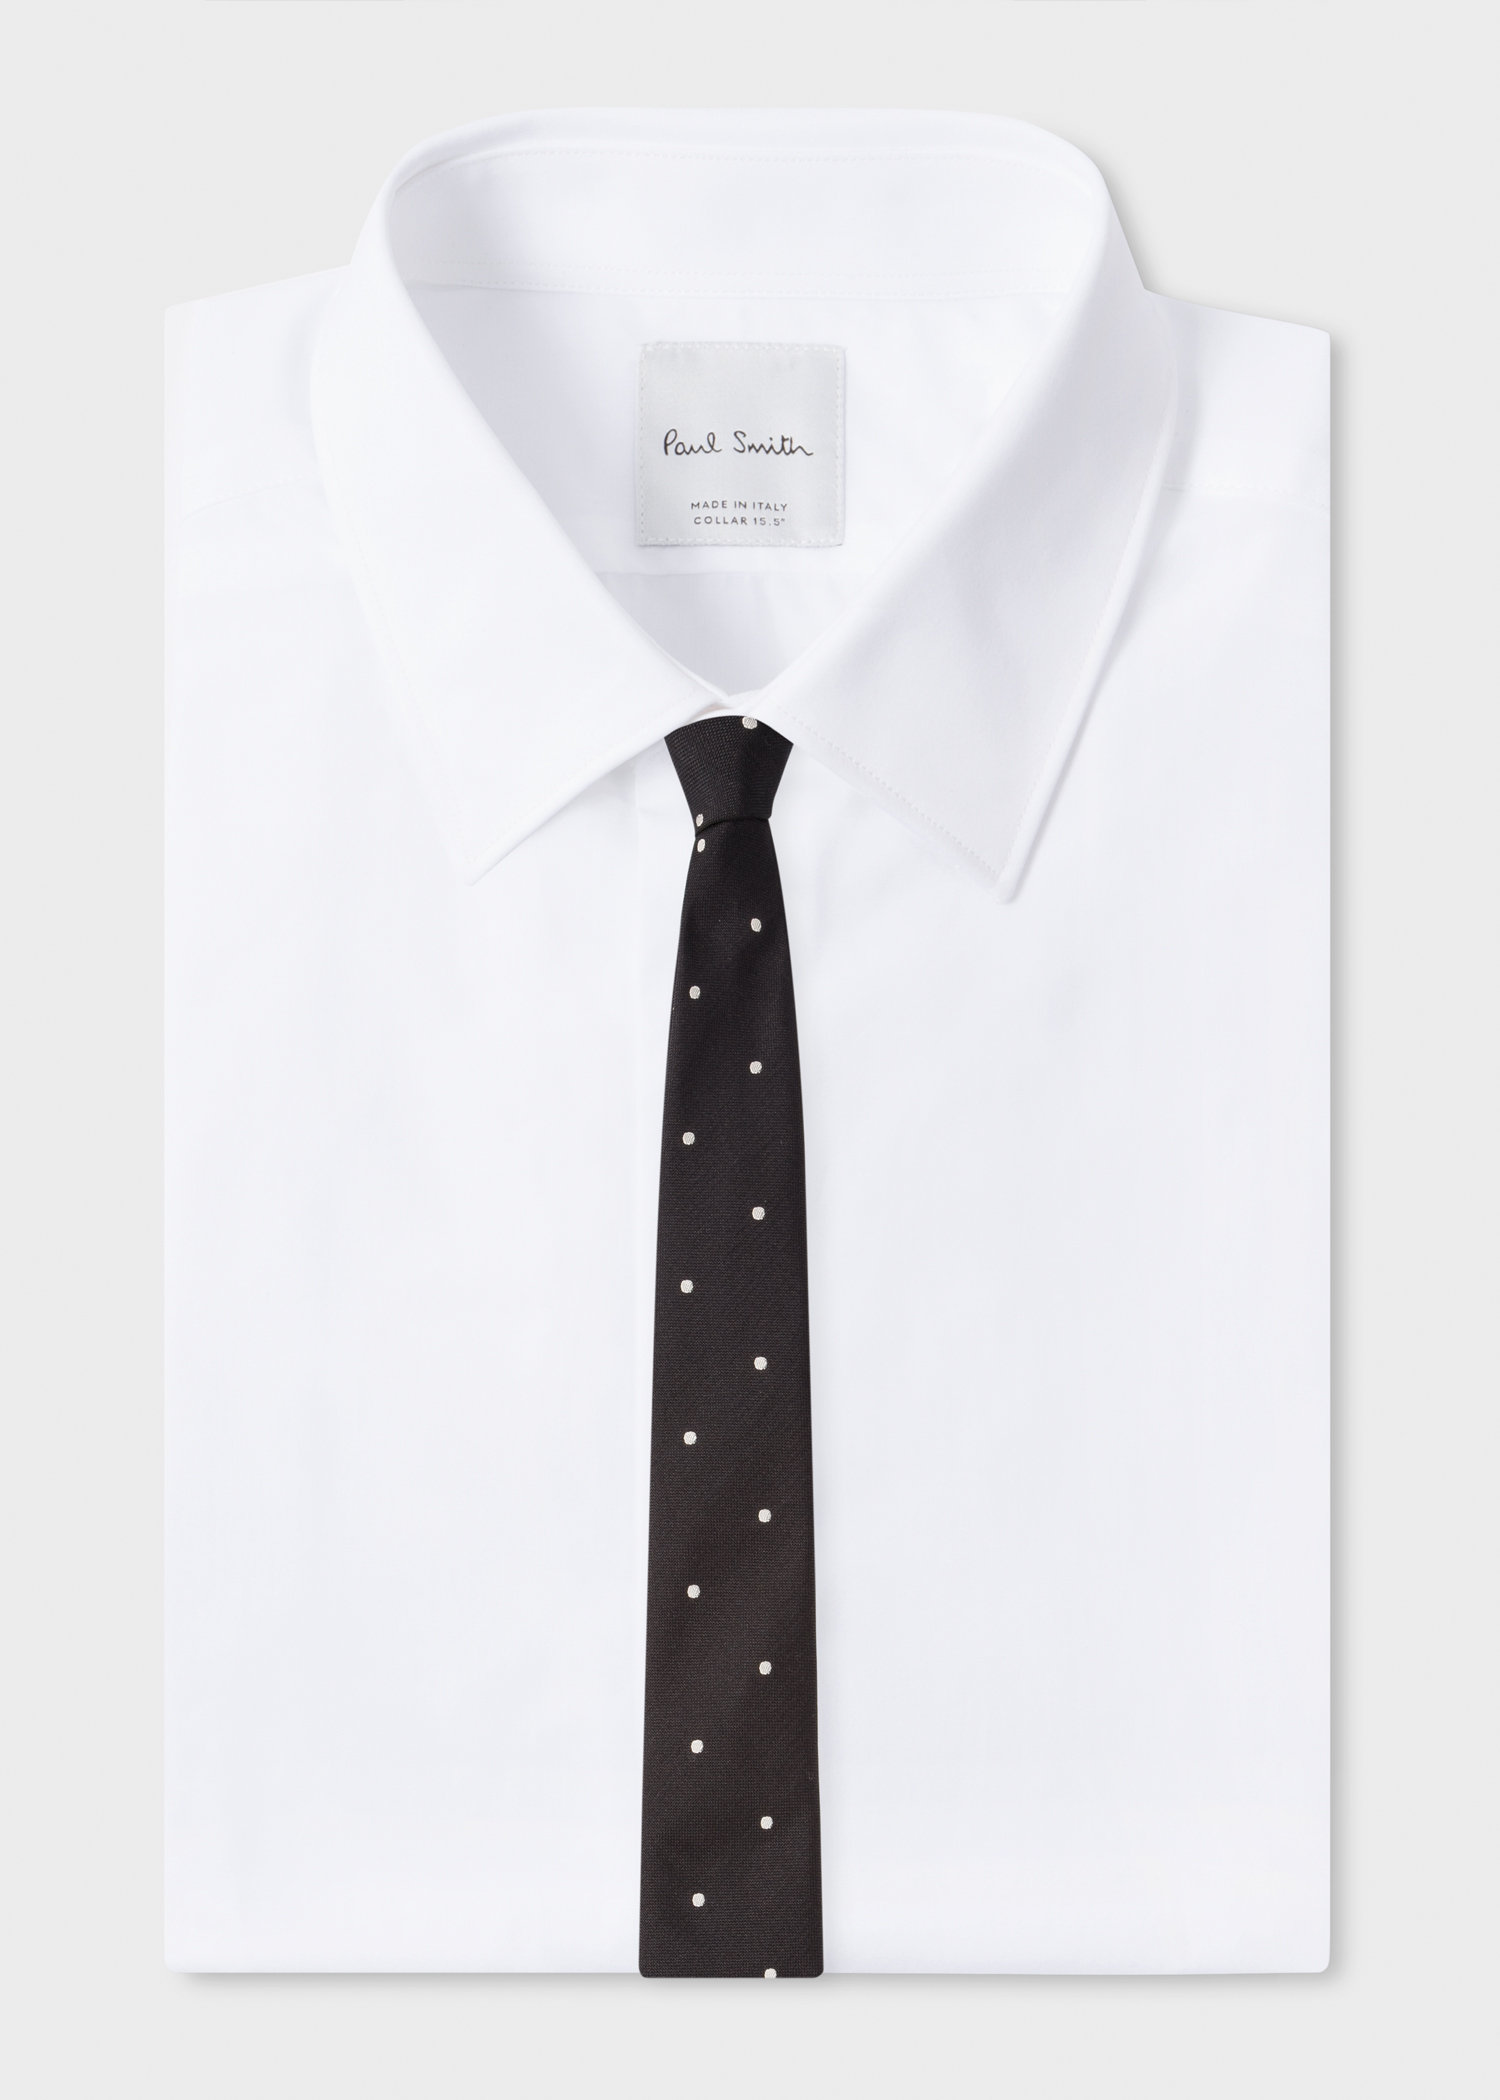 On Shirt View - Men's Black Polka Dot Narrow Silk Tie Paul Smith